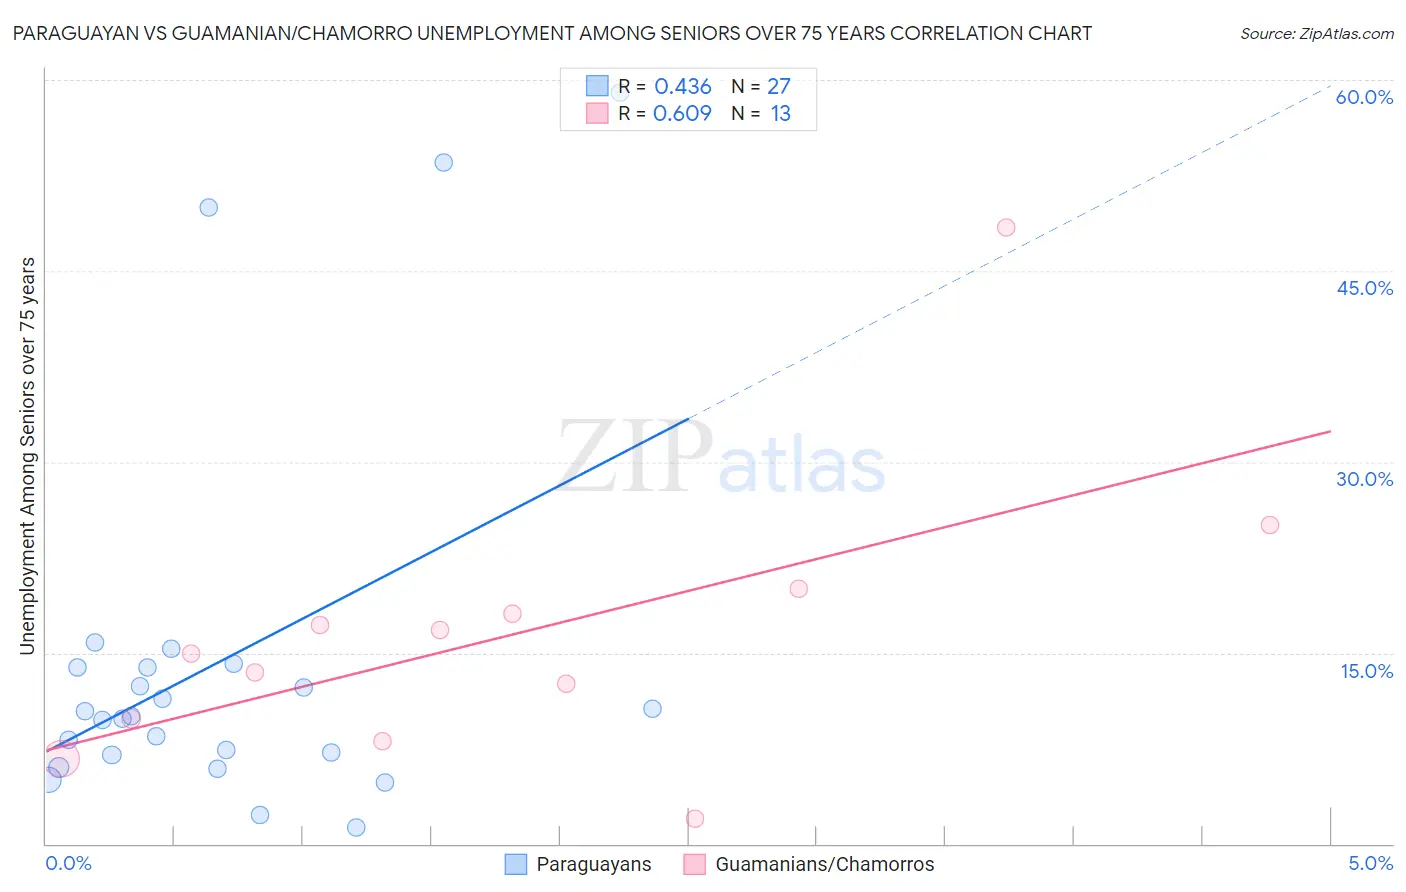 Paraguayan vs Guamanian/Chamorro Unemployment Among Seniors over 75 years